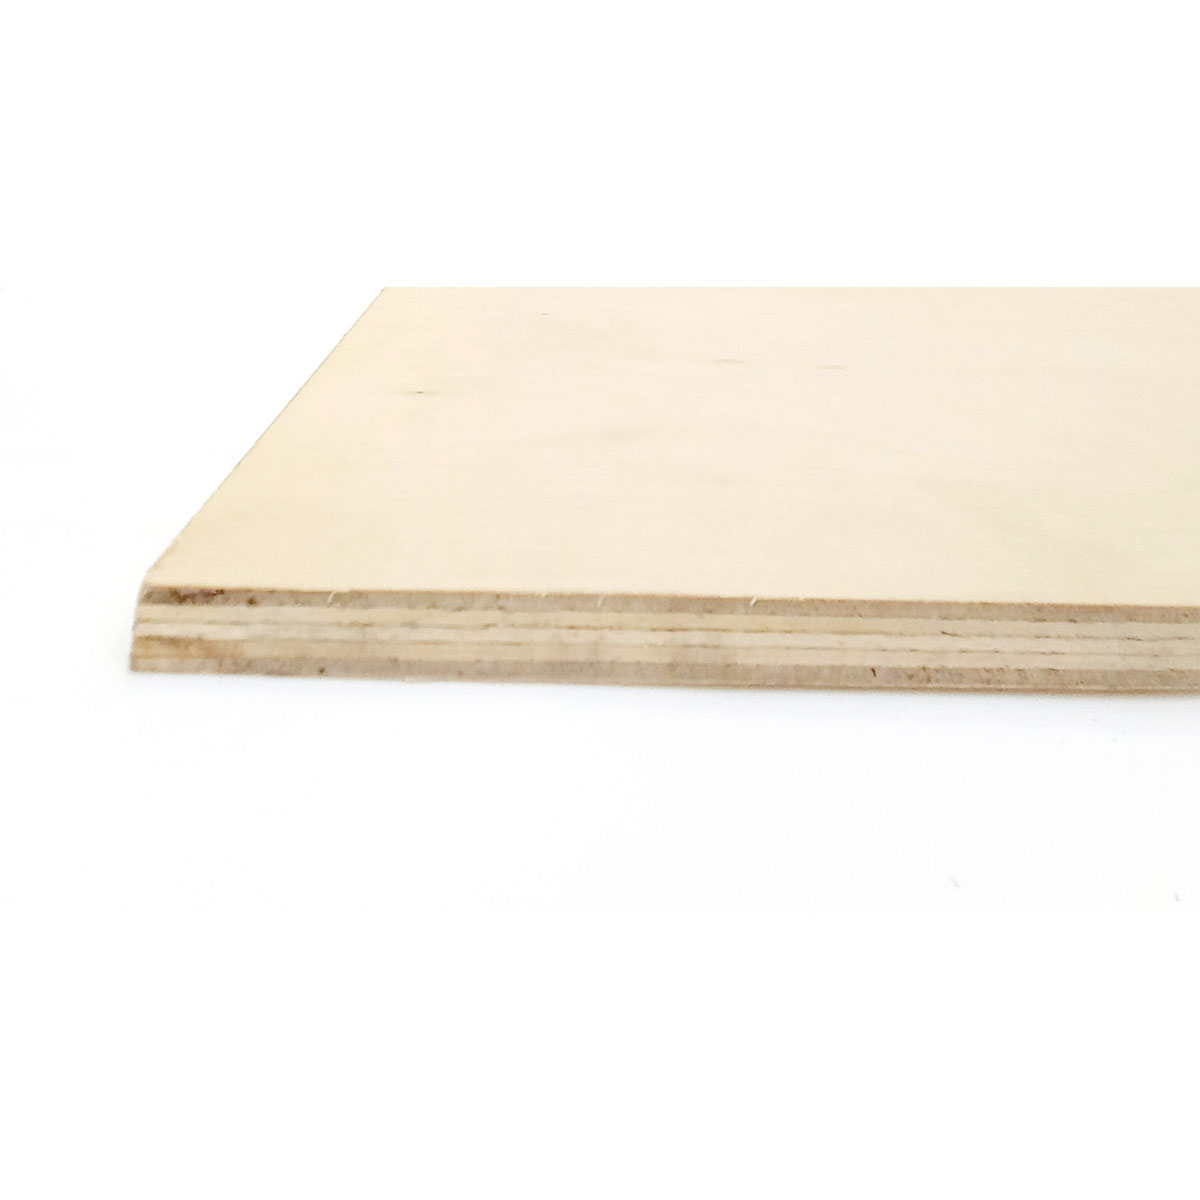 DIN A5 Birke Multiplex-Platte 9 mm - Holzbrett zum Basteln